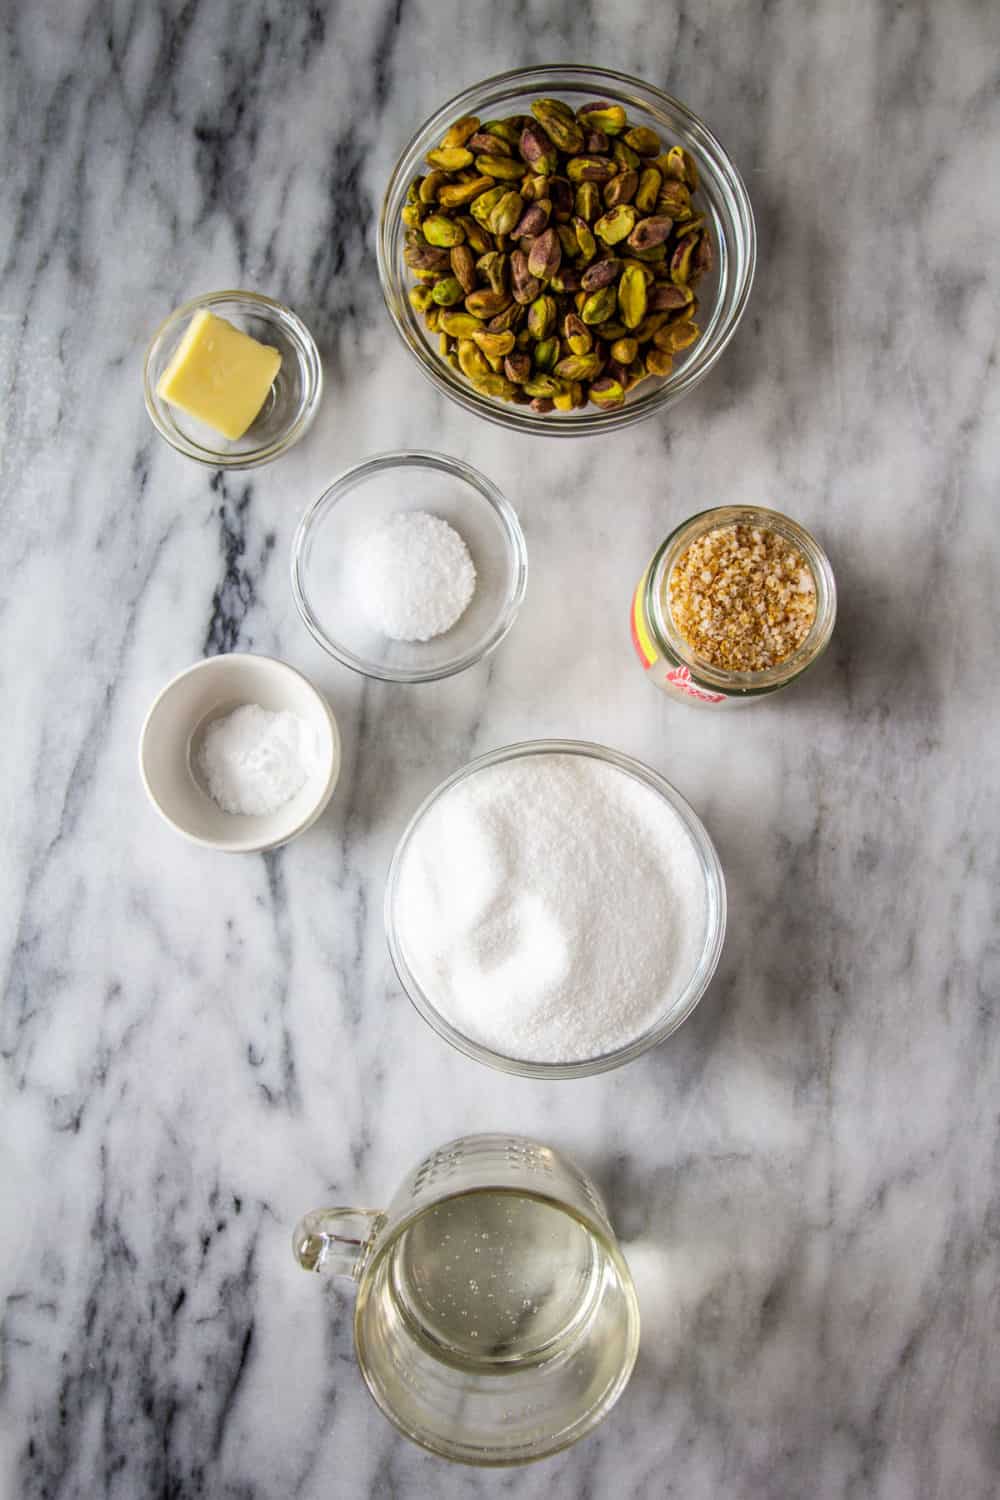 Ingredients needed to make sweet & salty pistachio brittle